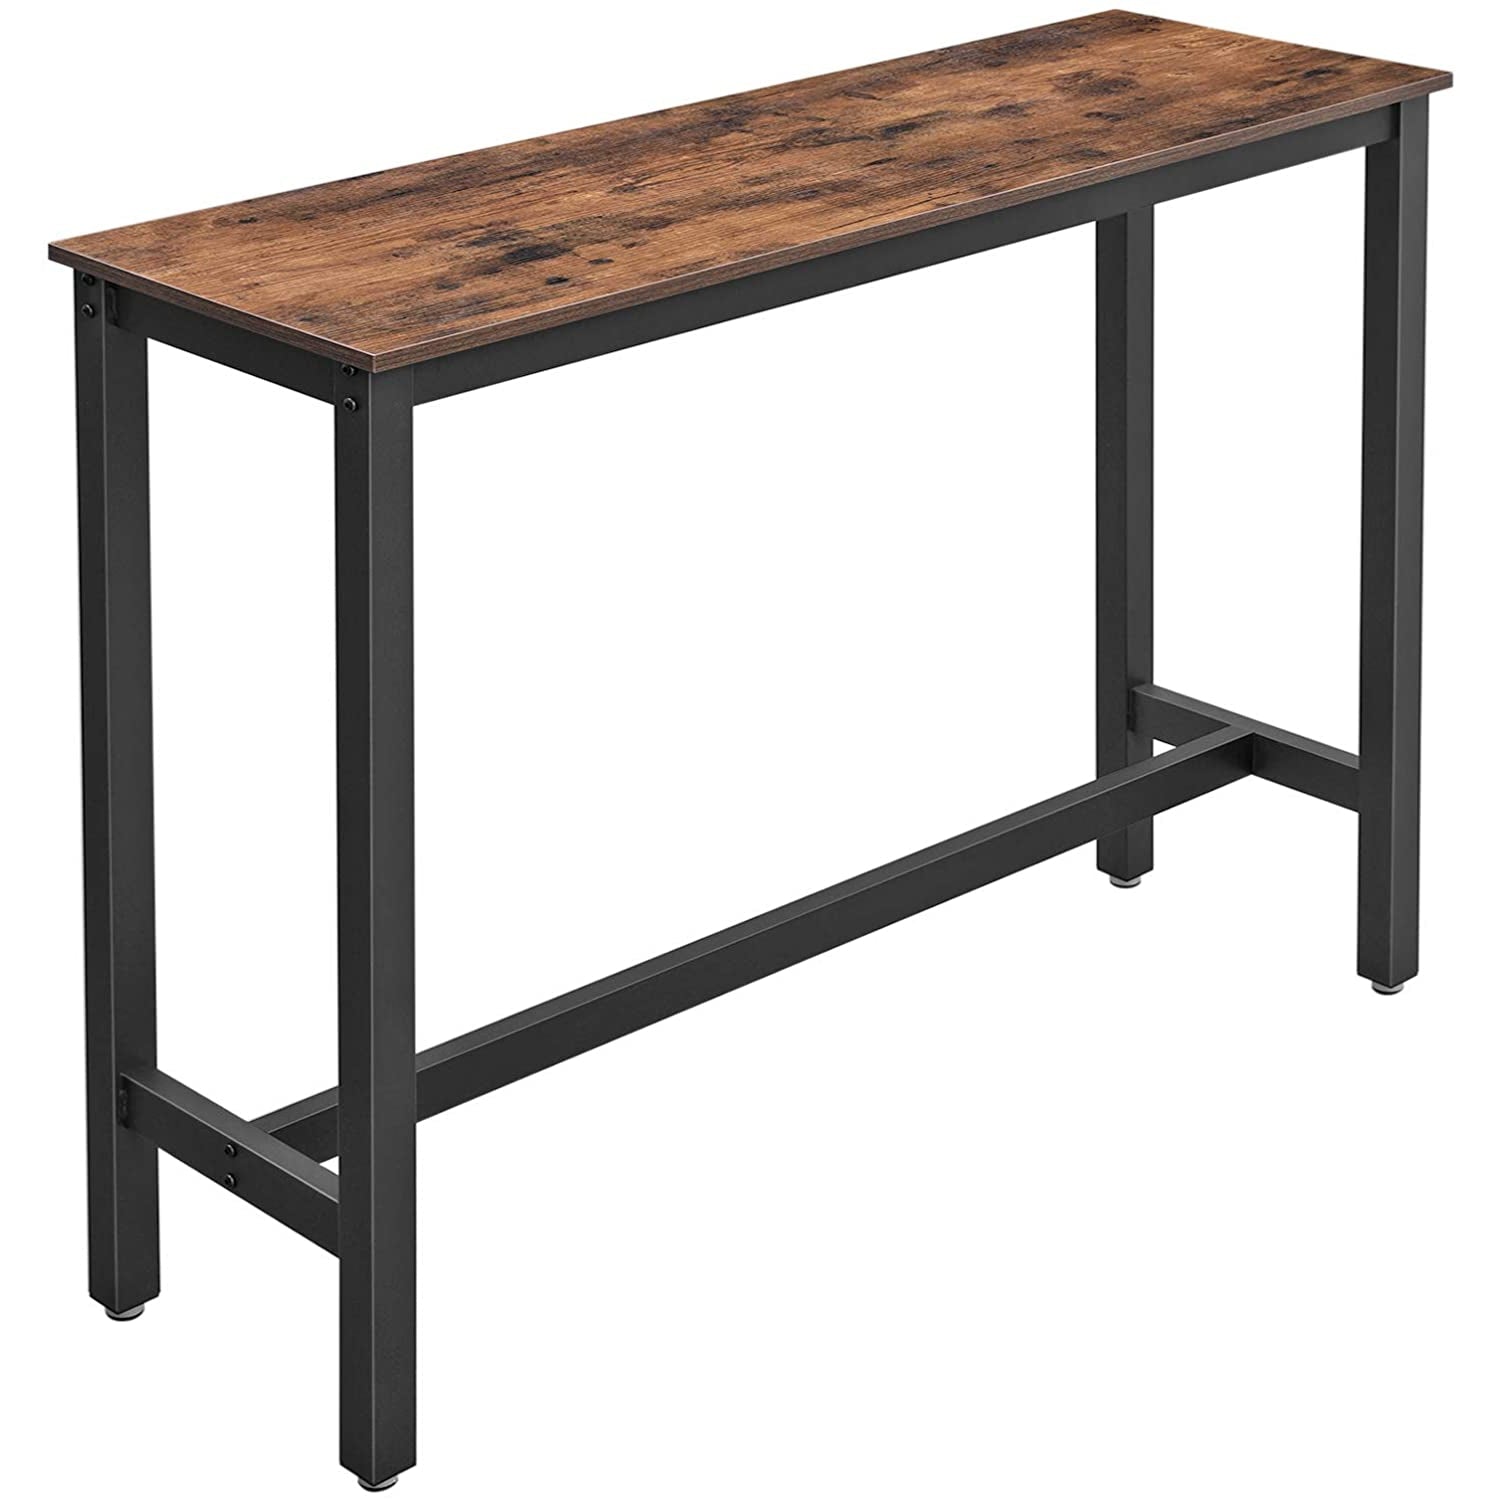 Nancy's Wooden Bar Table - Vintage Kitchen Table - Kitchen Bar Tables - High Desk - Industrial - Wood & Metal - 120 x 40 x 100 cm